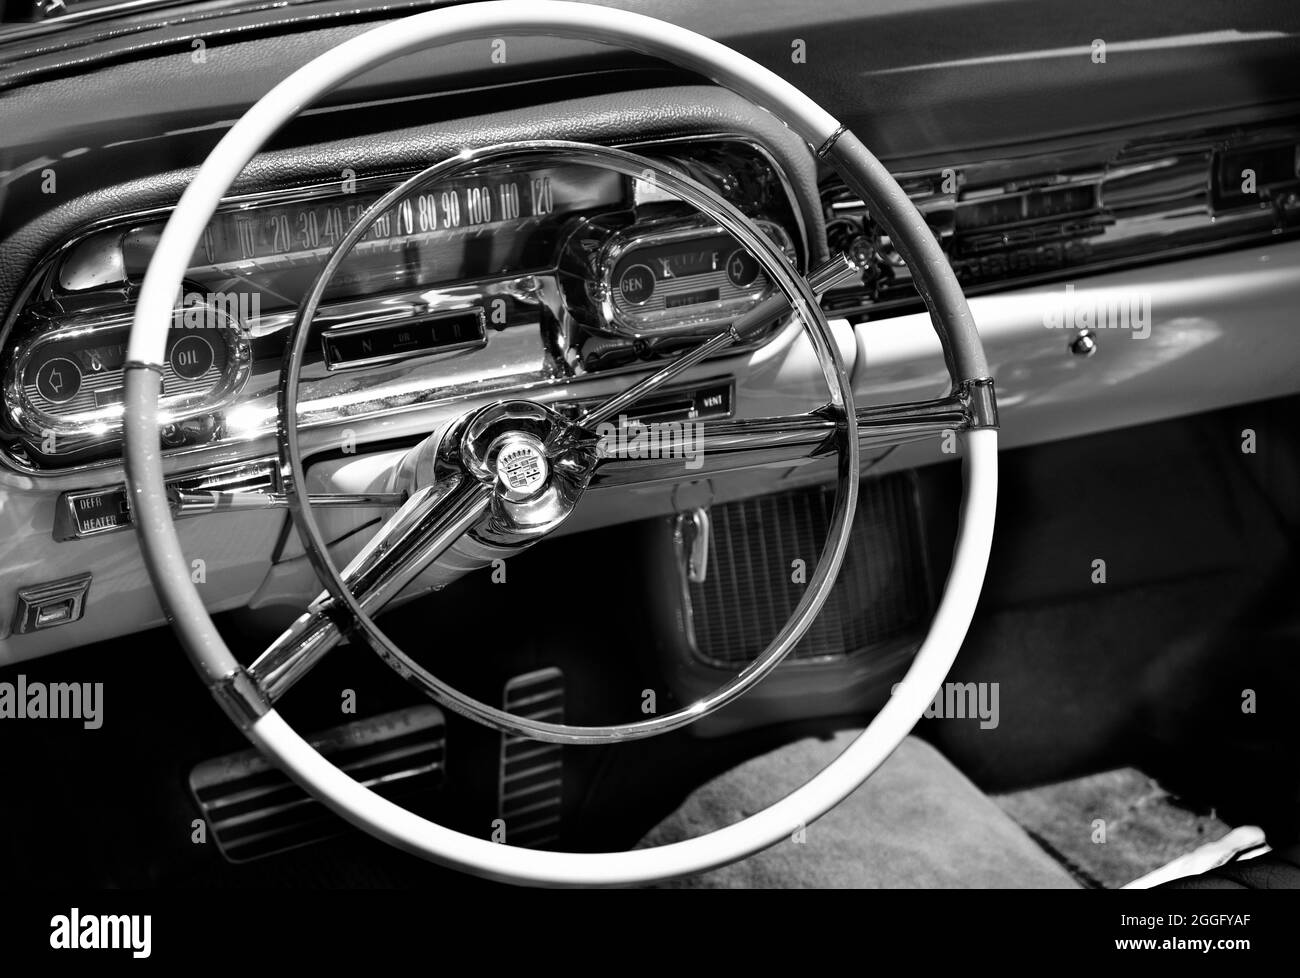 1959 Cadillac Coupe De Ville dash Old Photo steering wheel